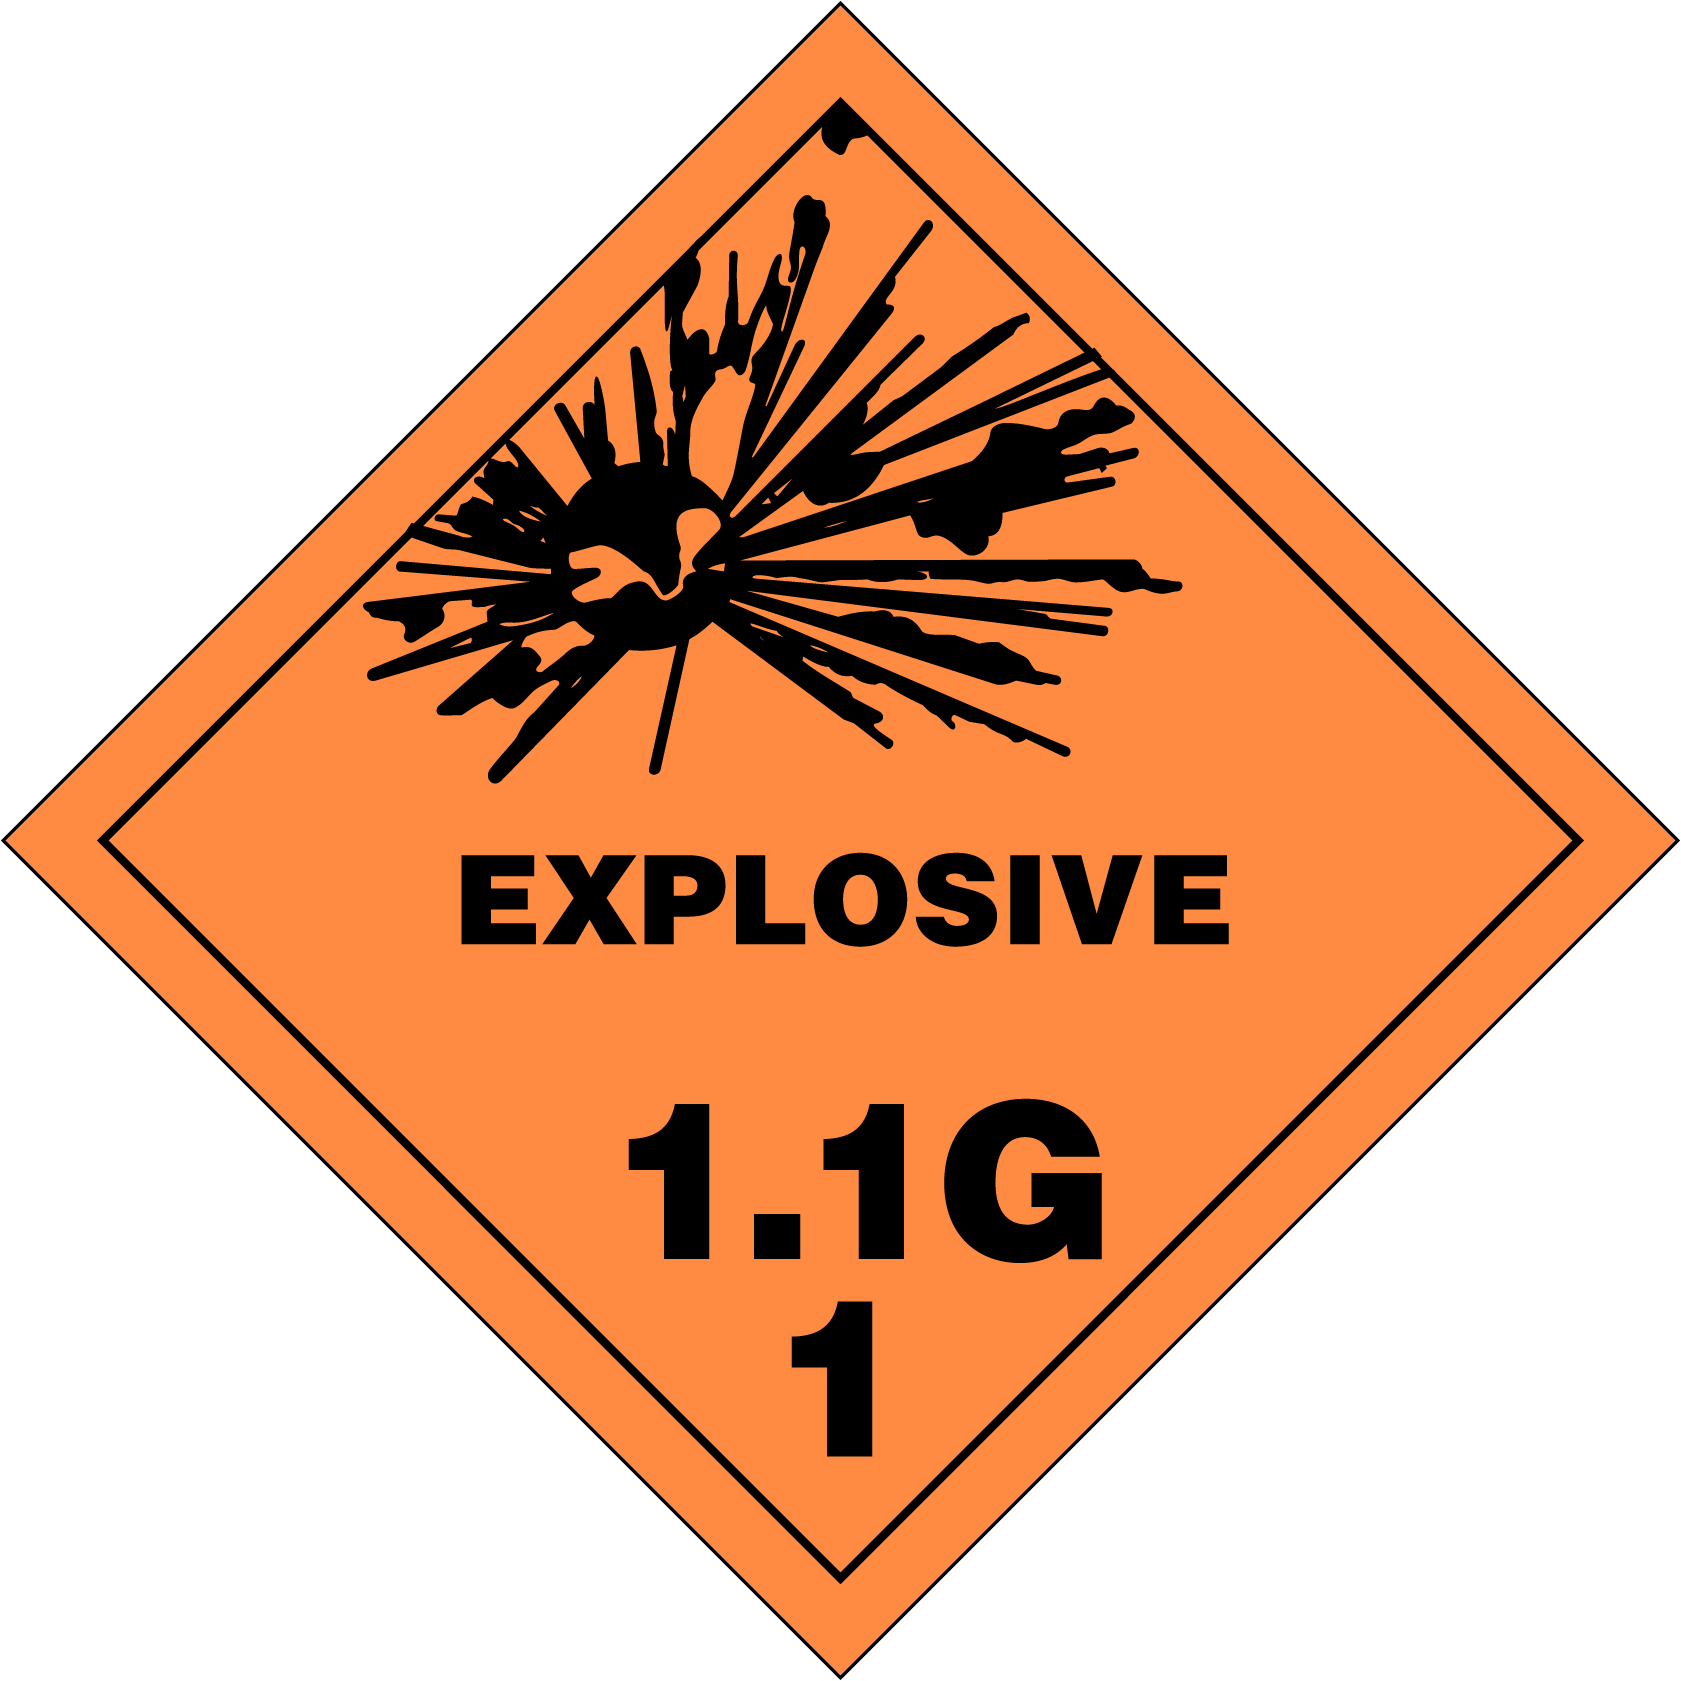 Explosives (1.1G)